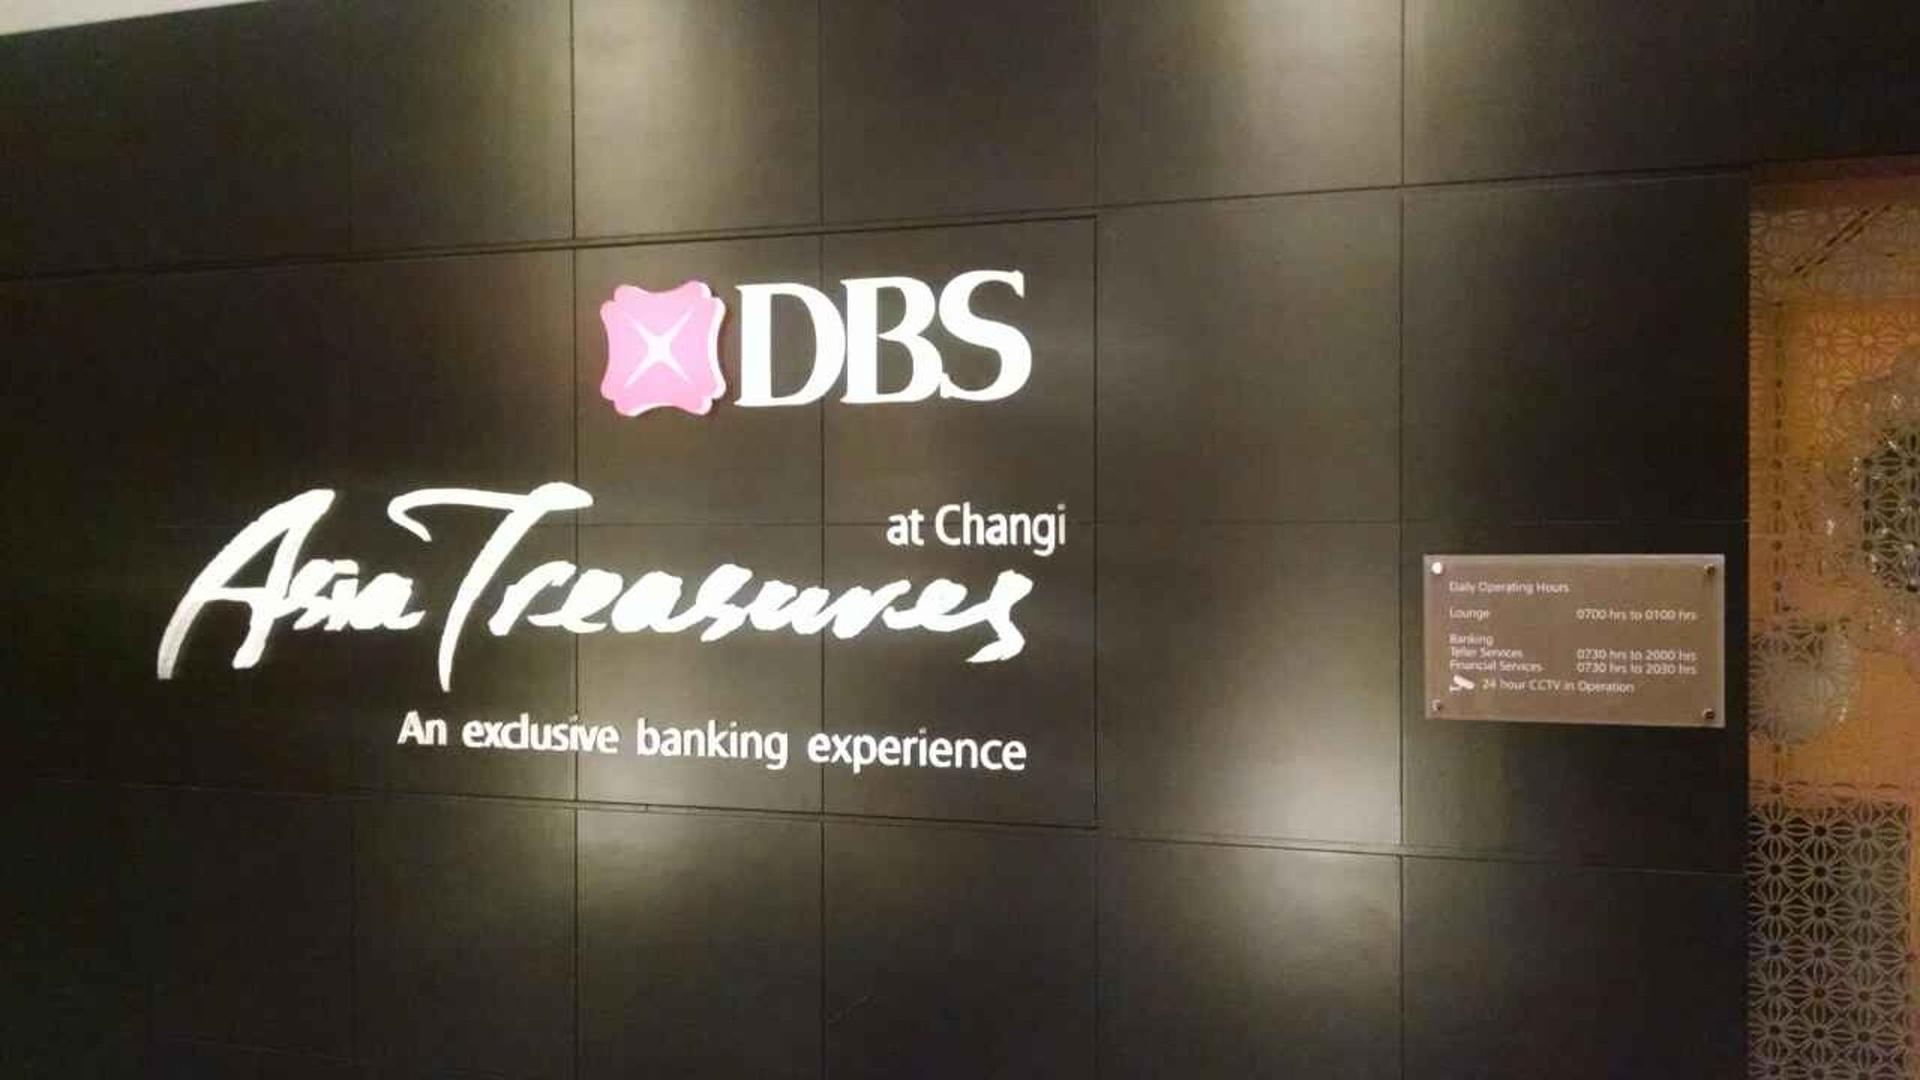 DBS Asia Treasures Lounge image 2 of 2